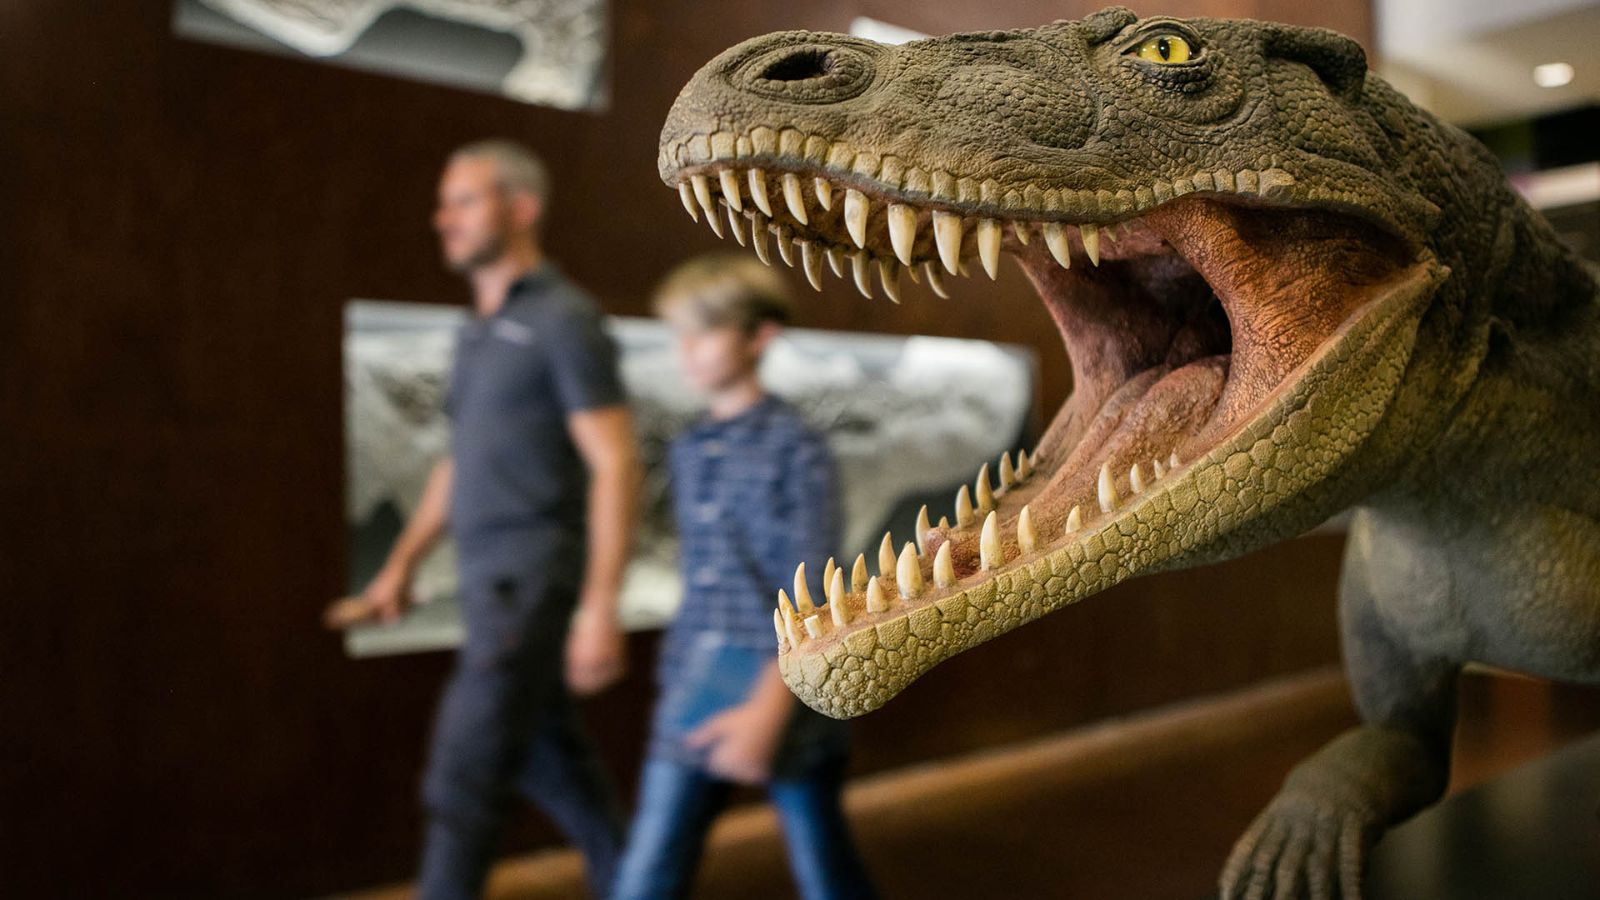 Fossils Museum, reconstruction of the Ticinosuchus sauro